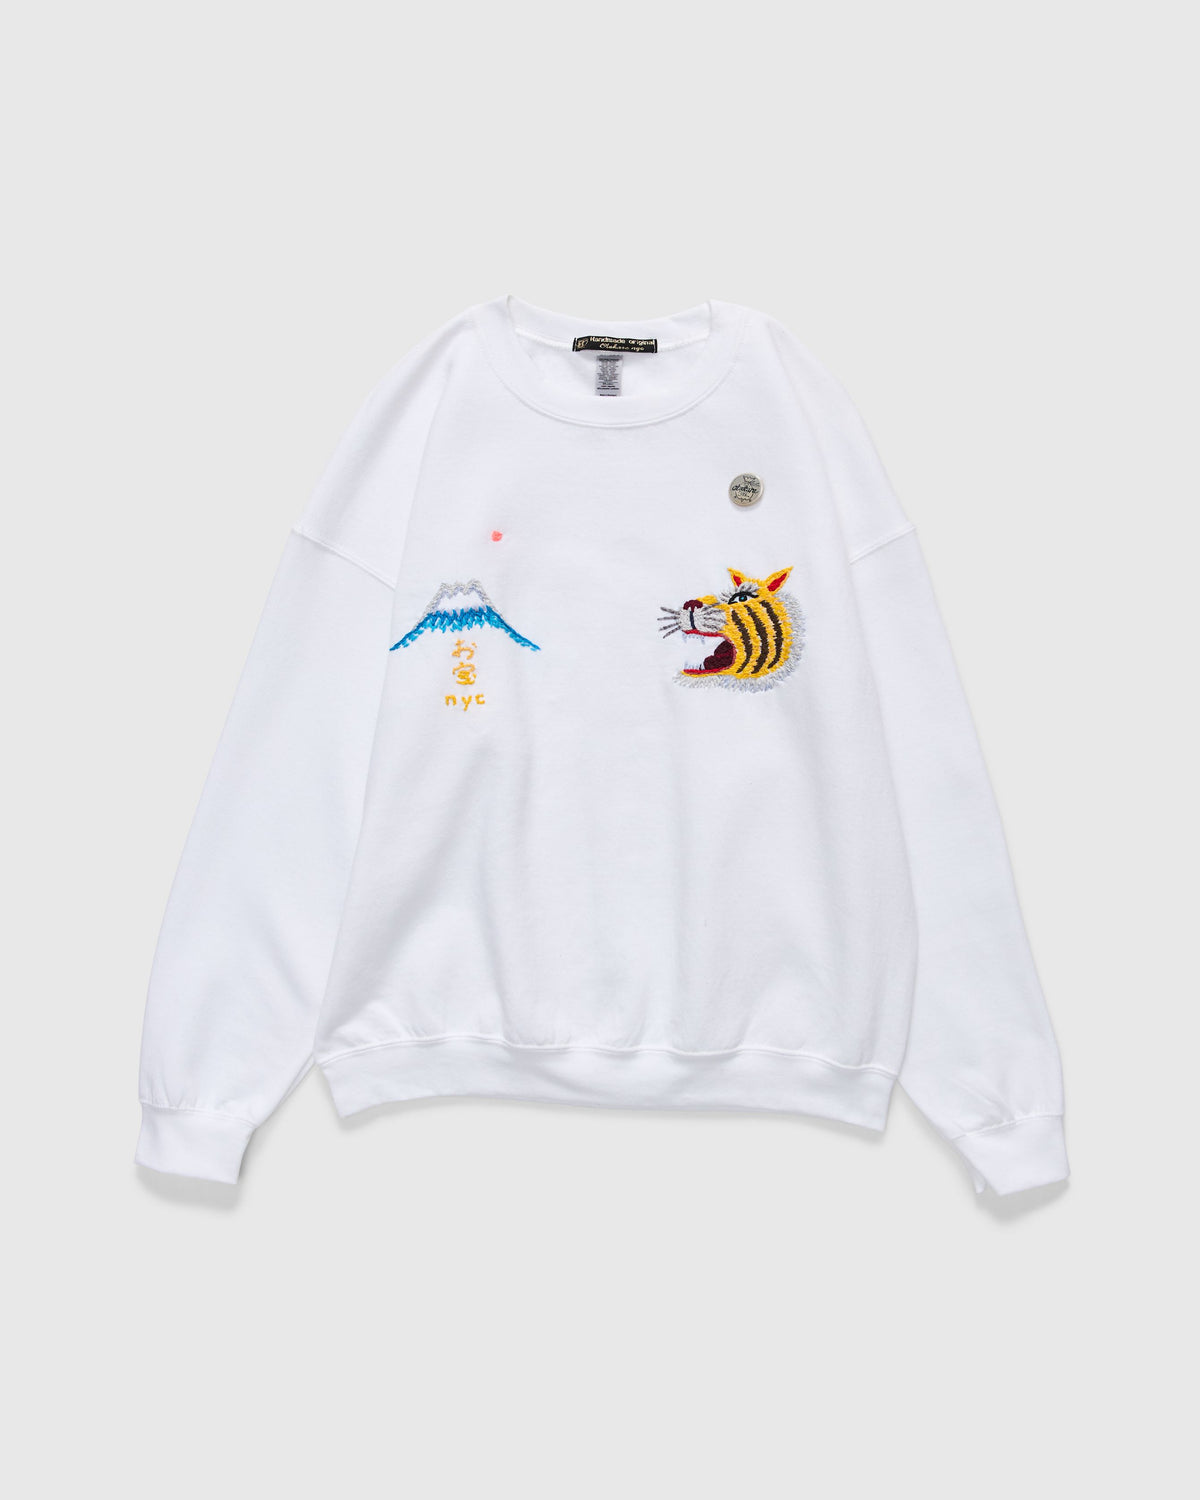 Suka Tora / Mt. Fuji Sweatshirt in White